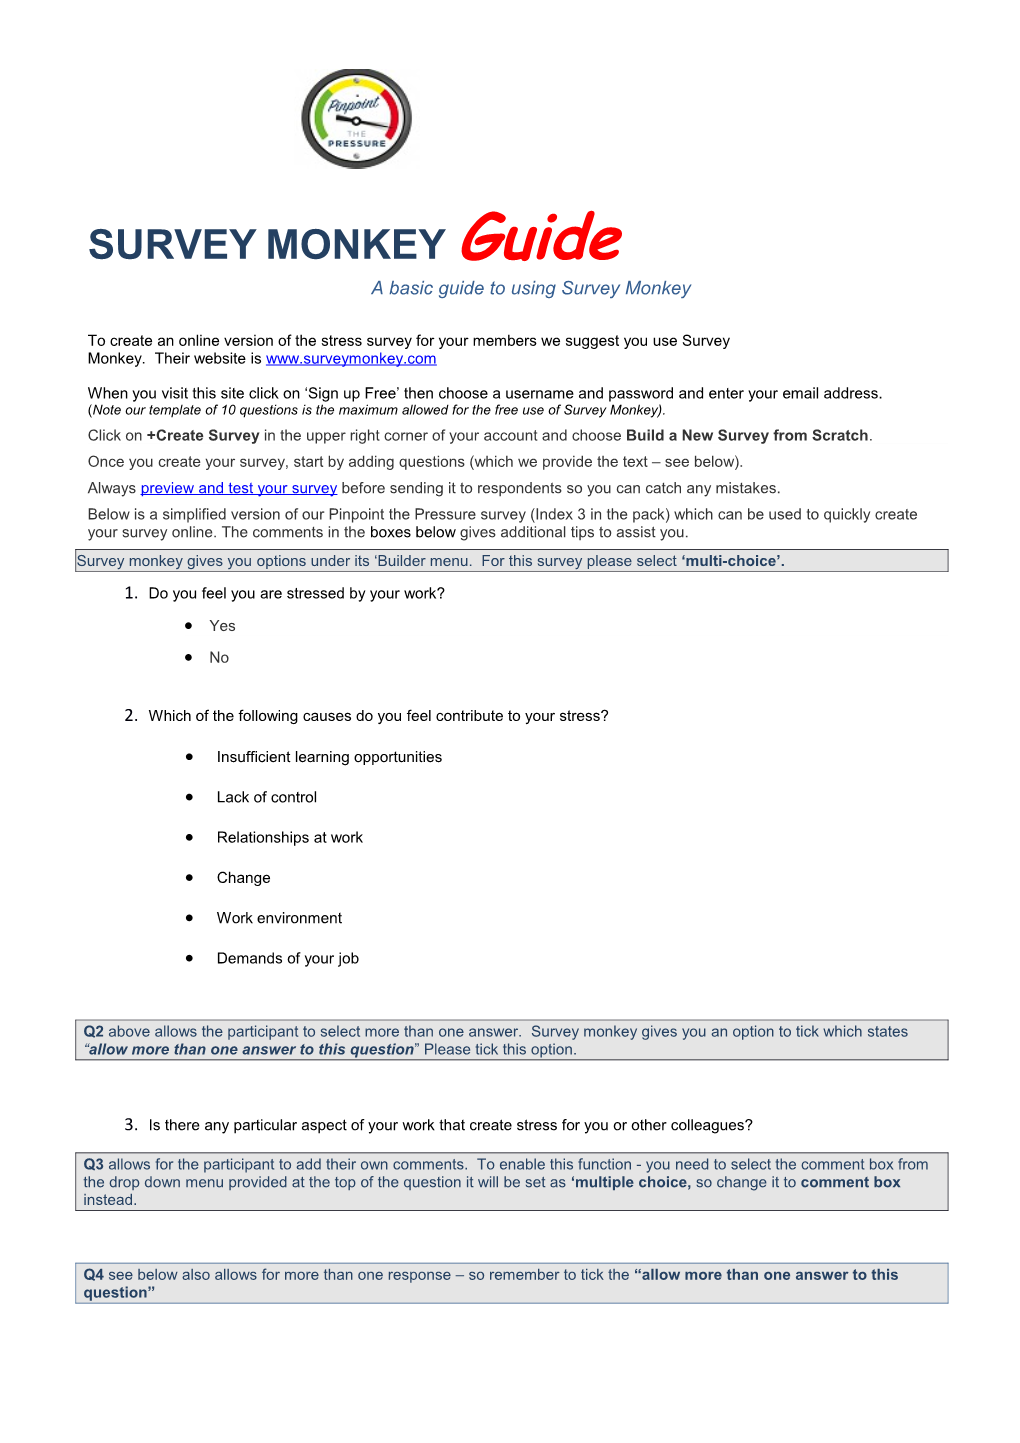 A Basic Guide to Using Survey Monkey